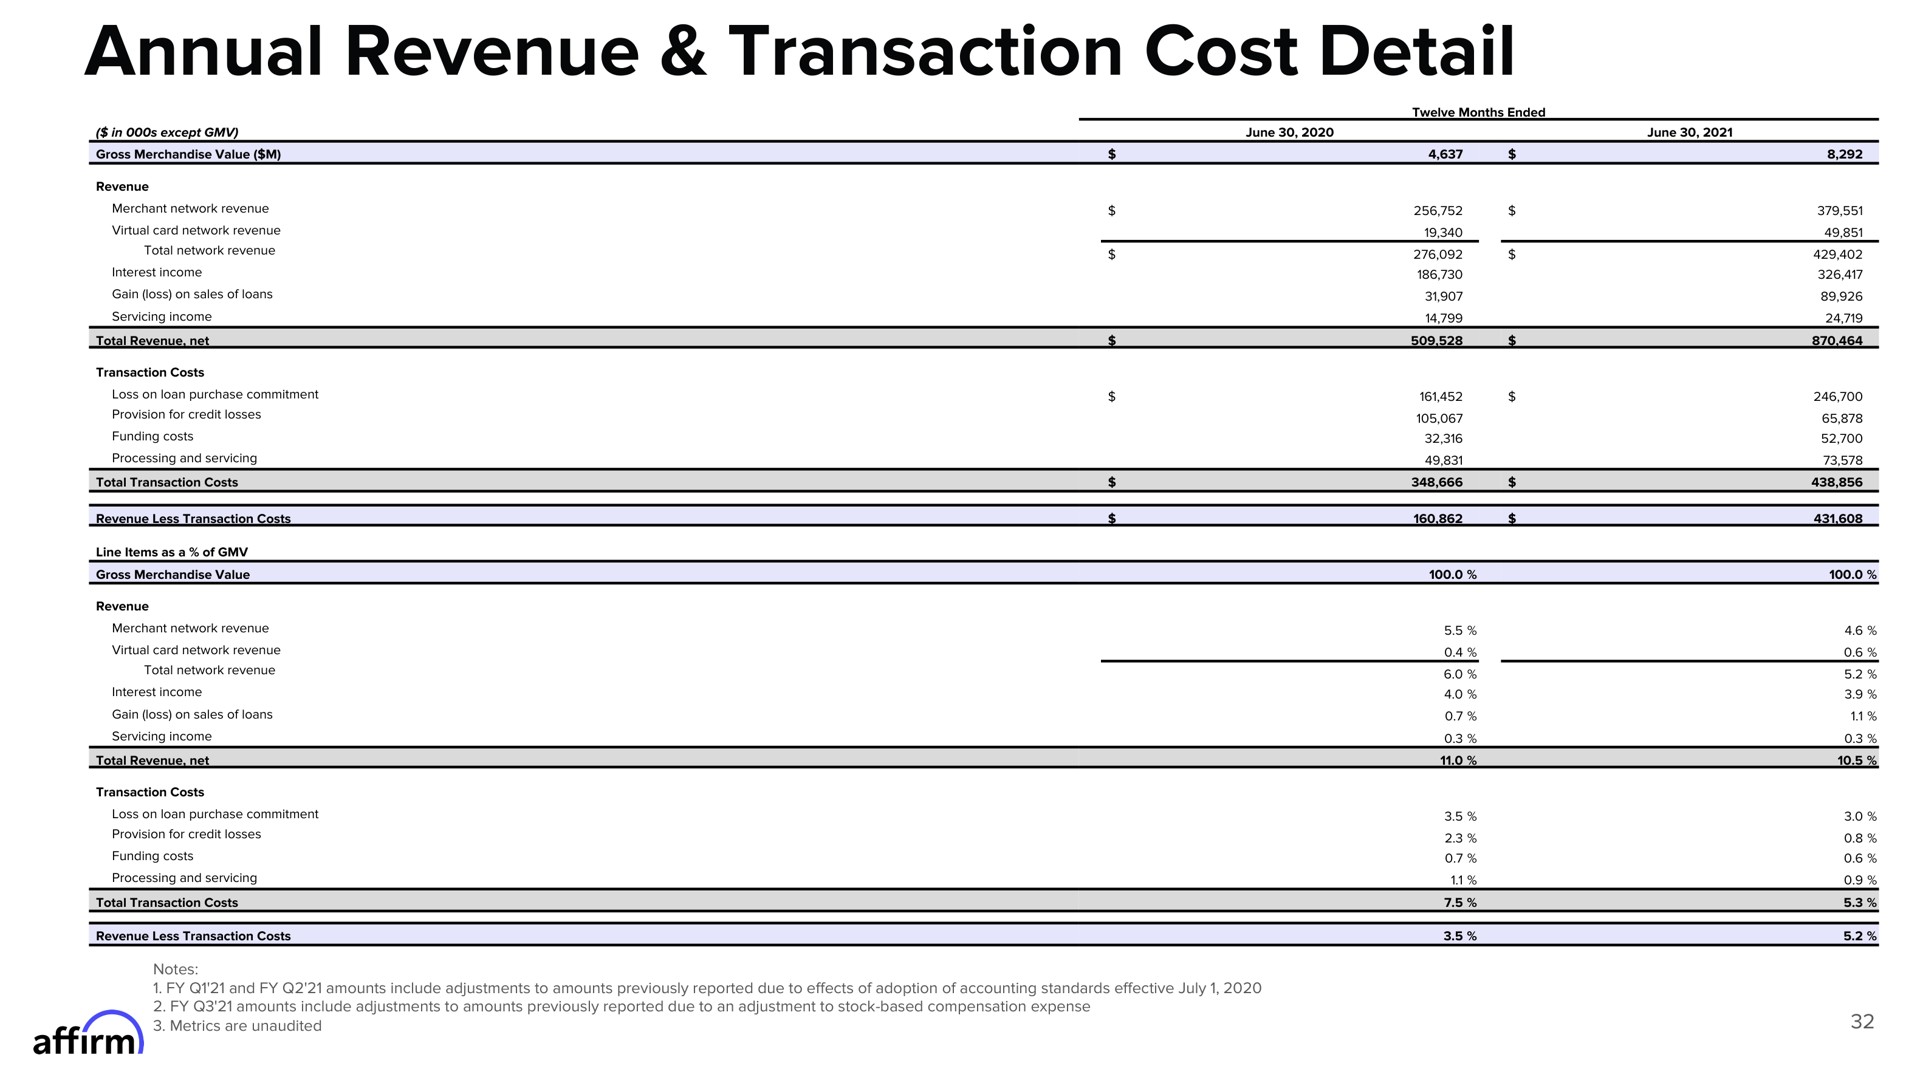 annual revenue transaction cost detail affirm | Affirm